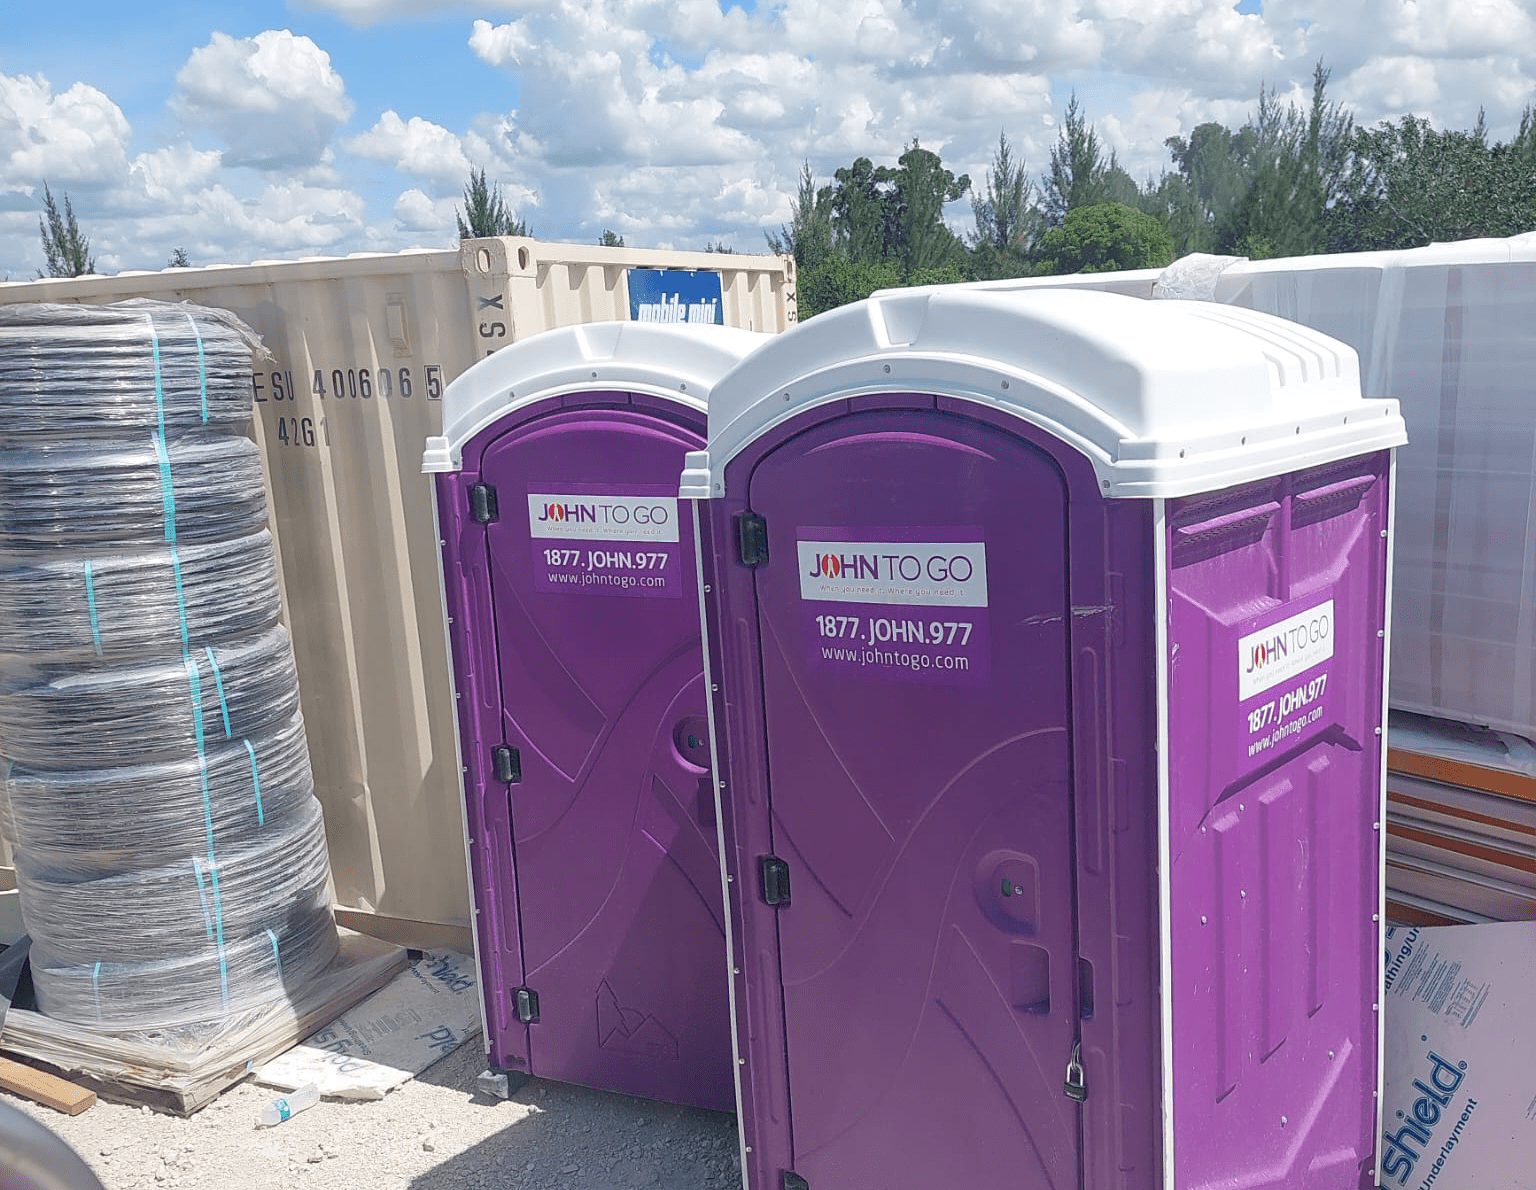 porta potty units on construction site